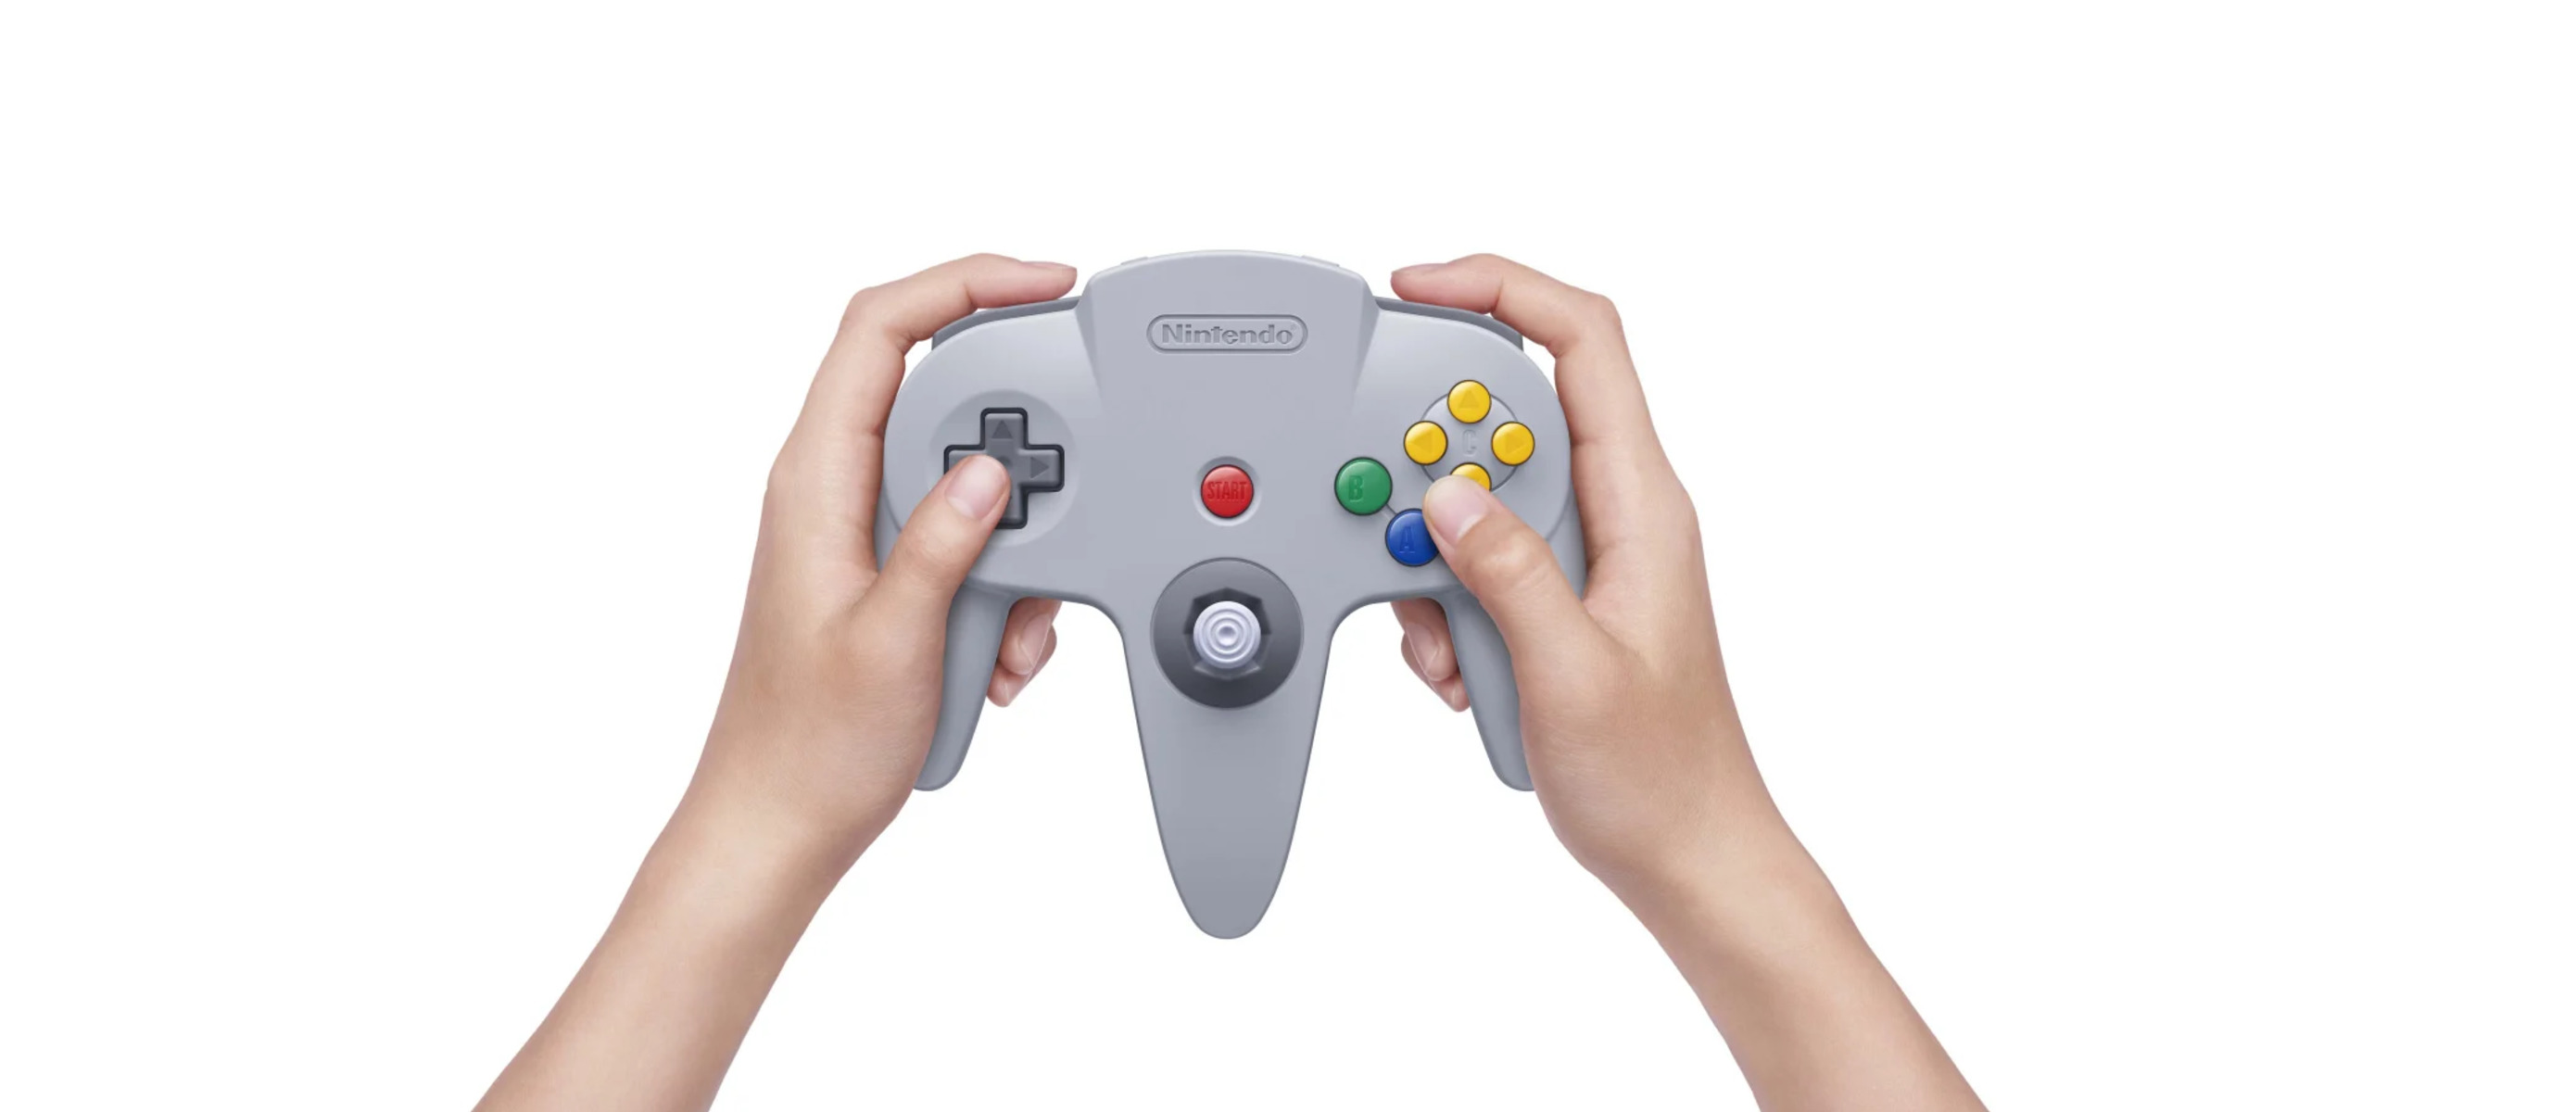 Nintendo control. Джойстик Нинтендо 64. Контроллер Nintendo n64. Gamepad n64 кнопки. Контроллер Nintendo 64.